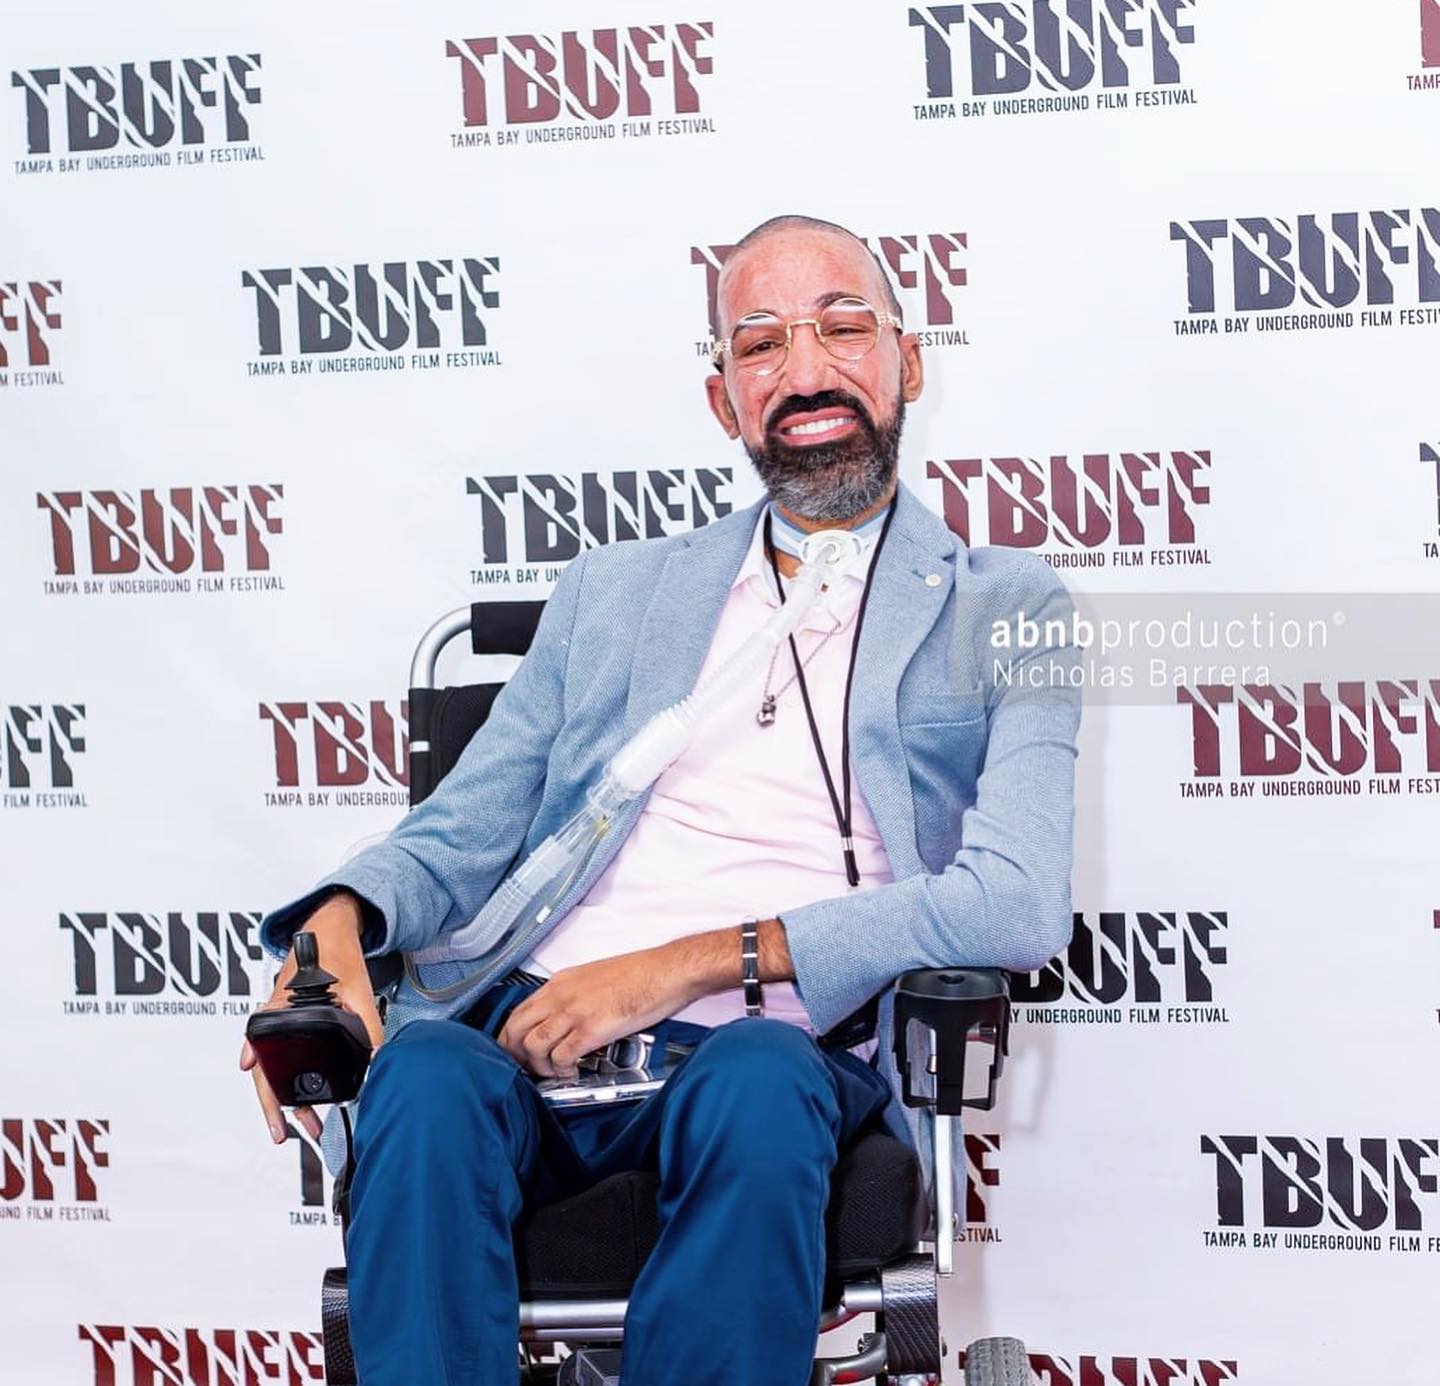 Christophe Tampa Bay Underground Film Festival